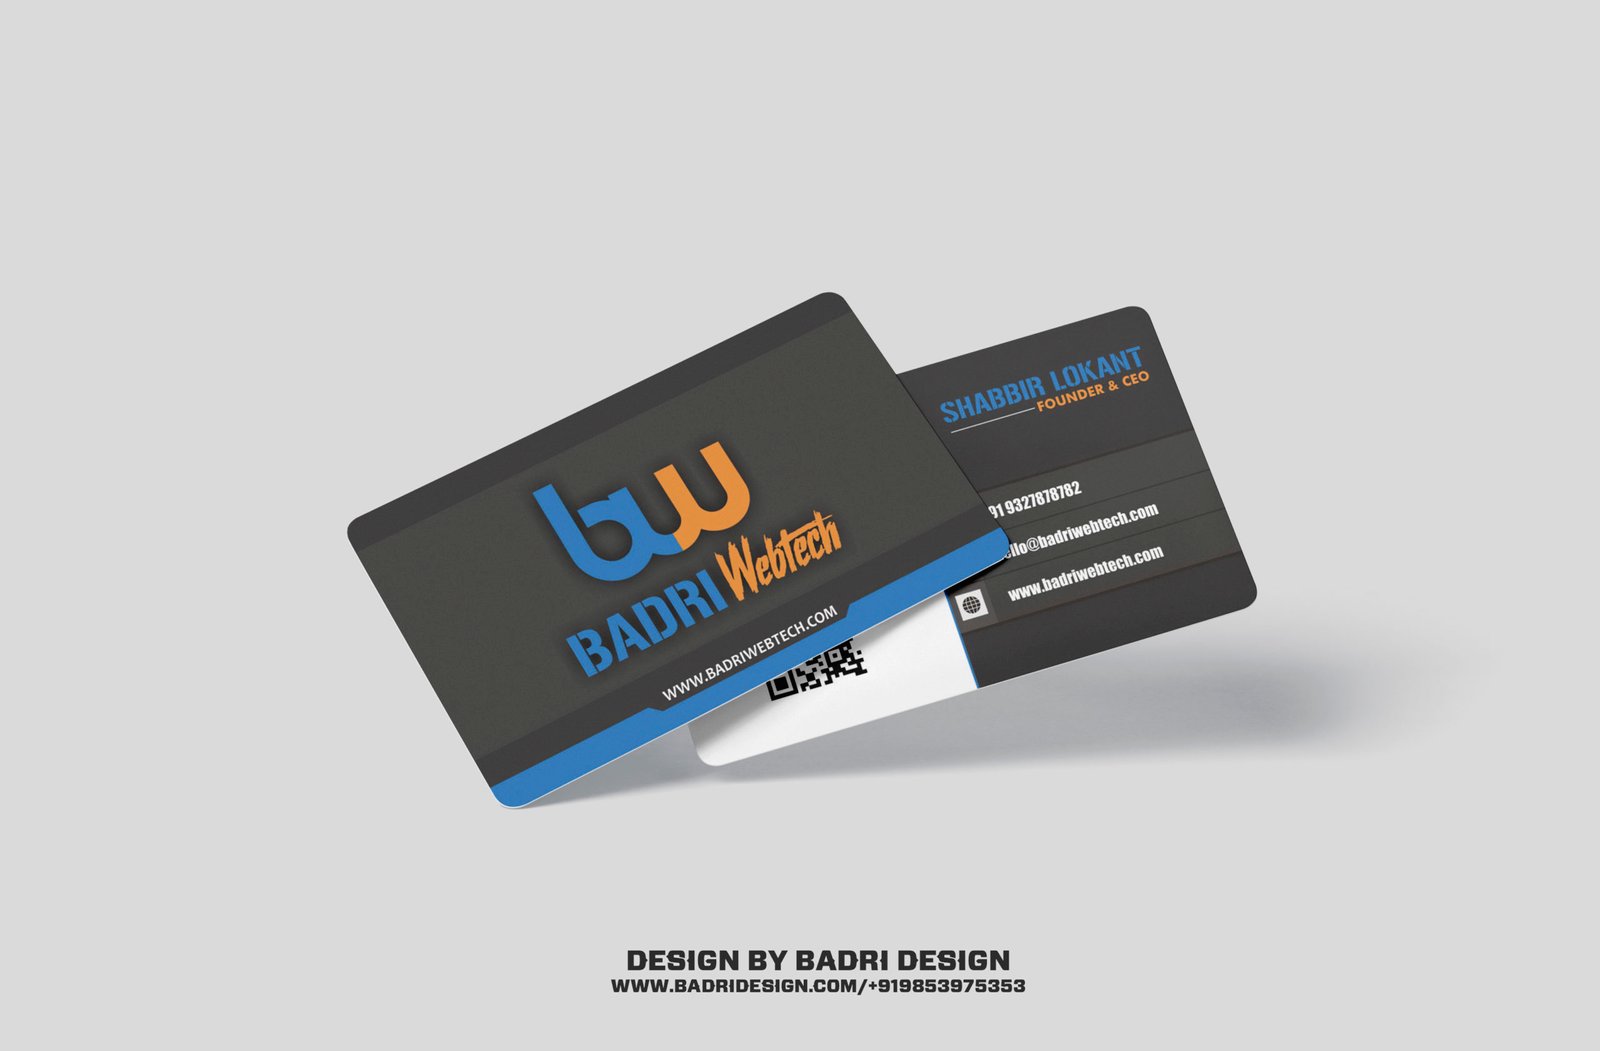 Webtech company business card design by Badri Design